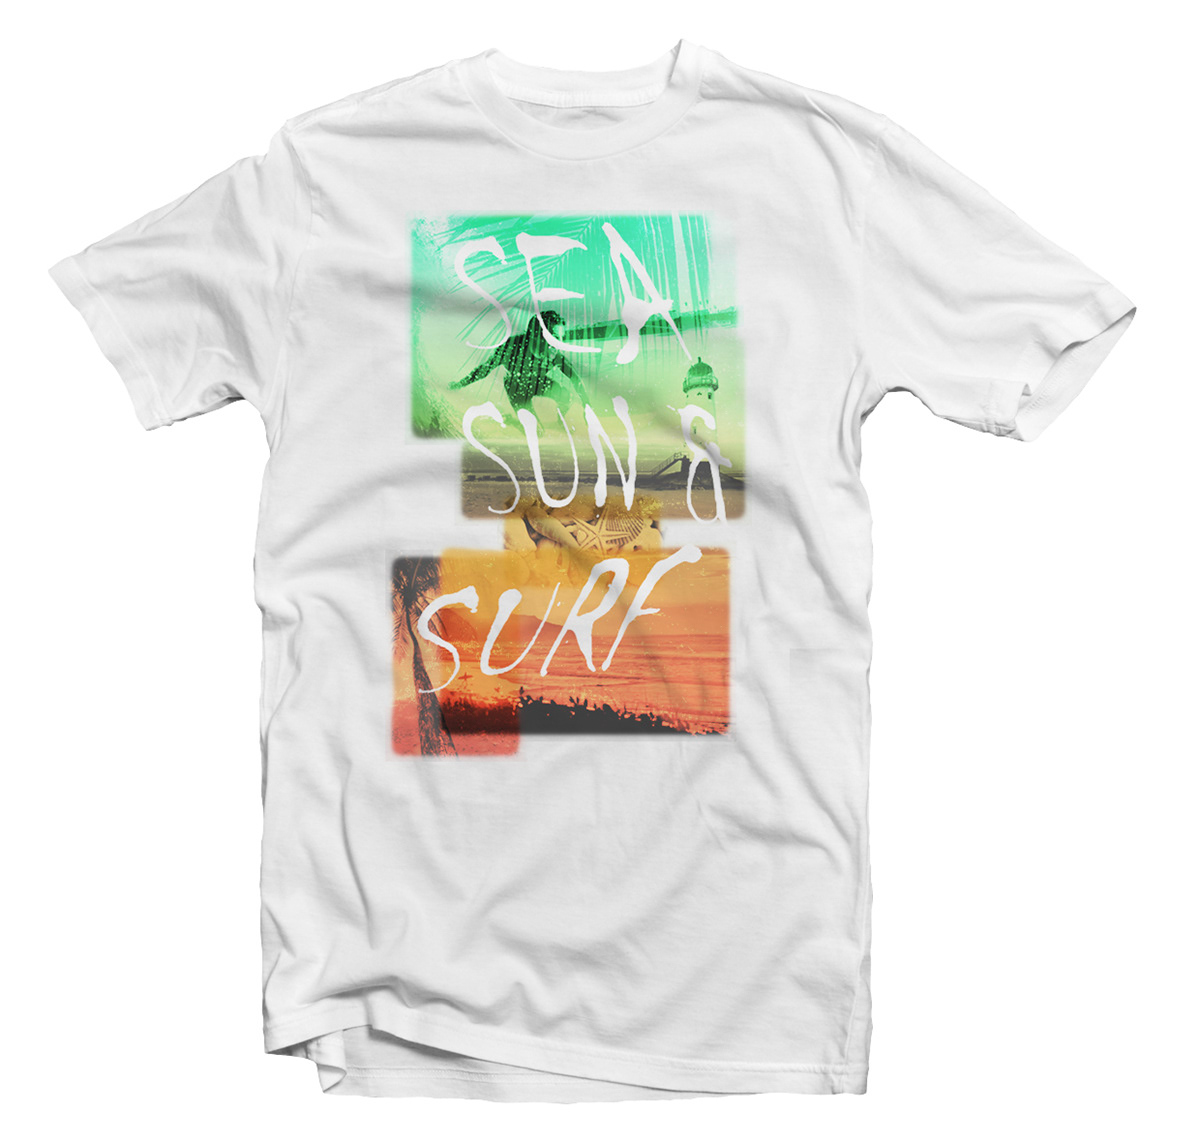 Surf tees t-shirts print design Clothing clothes